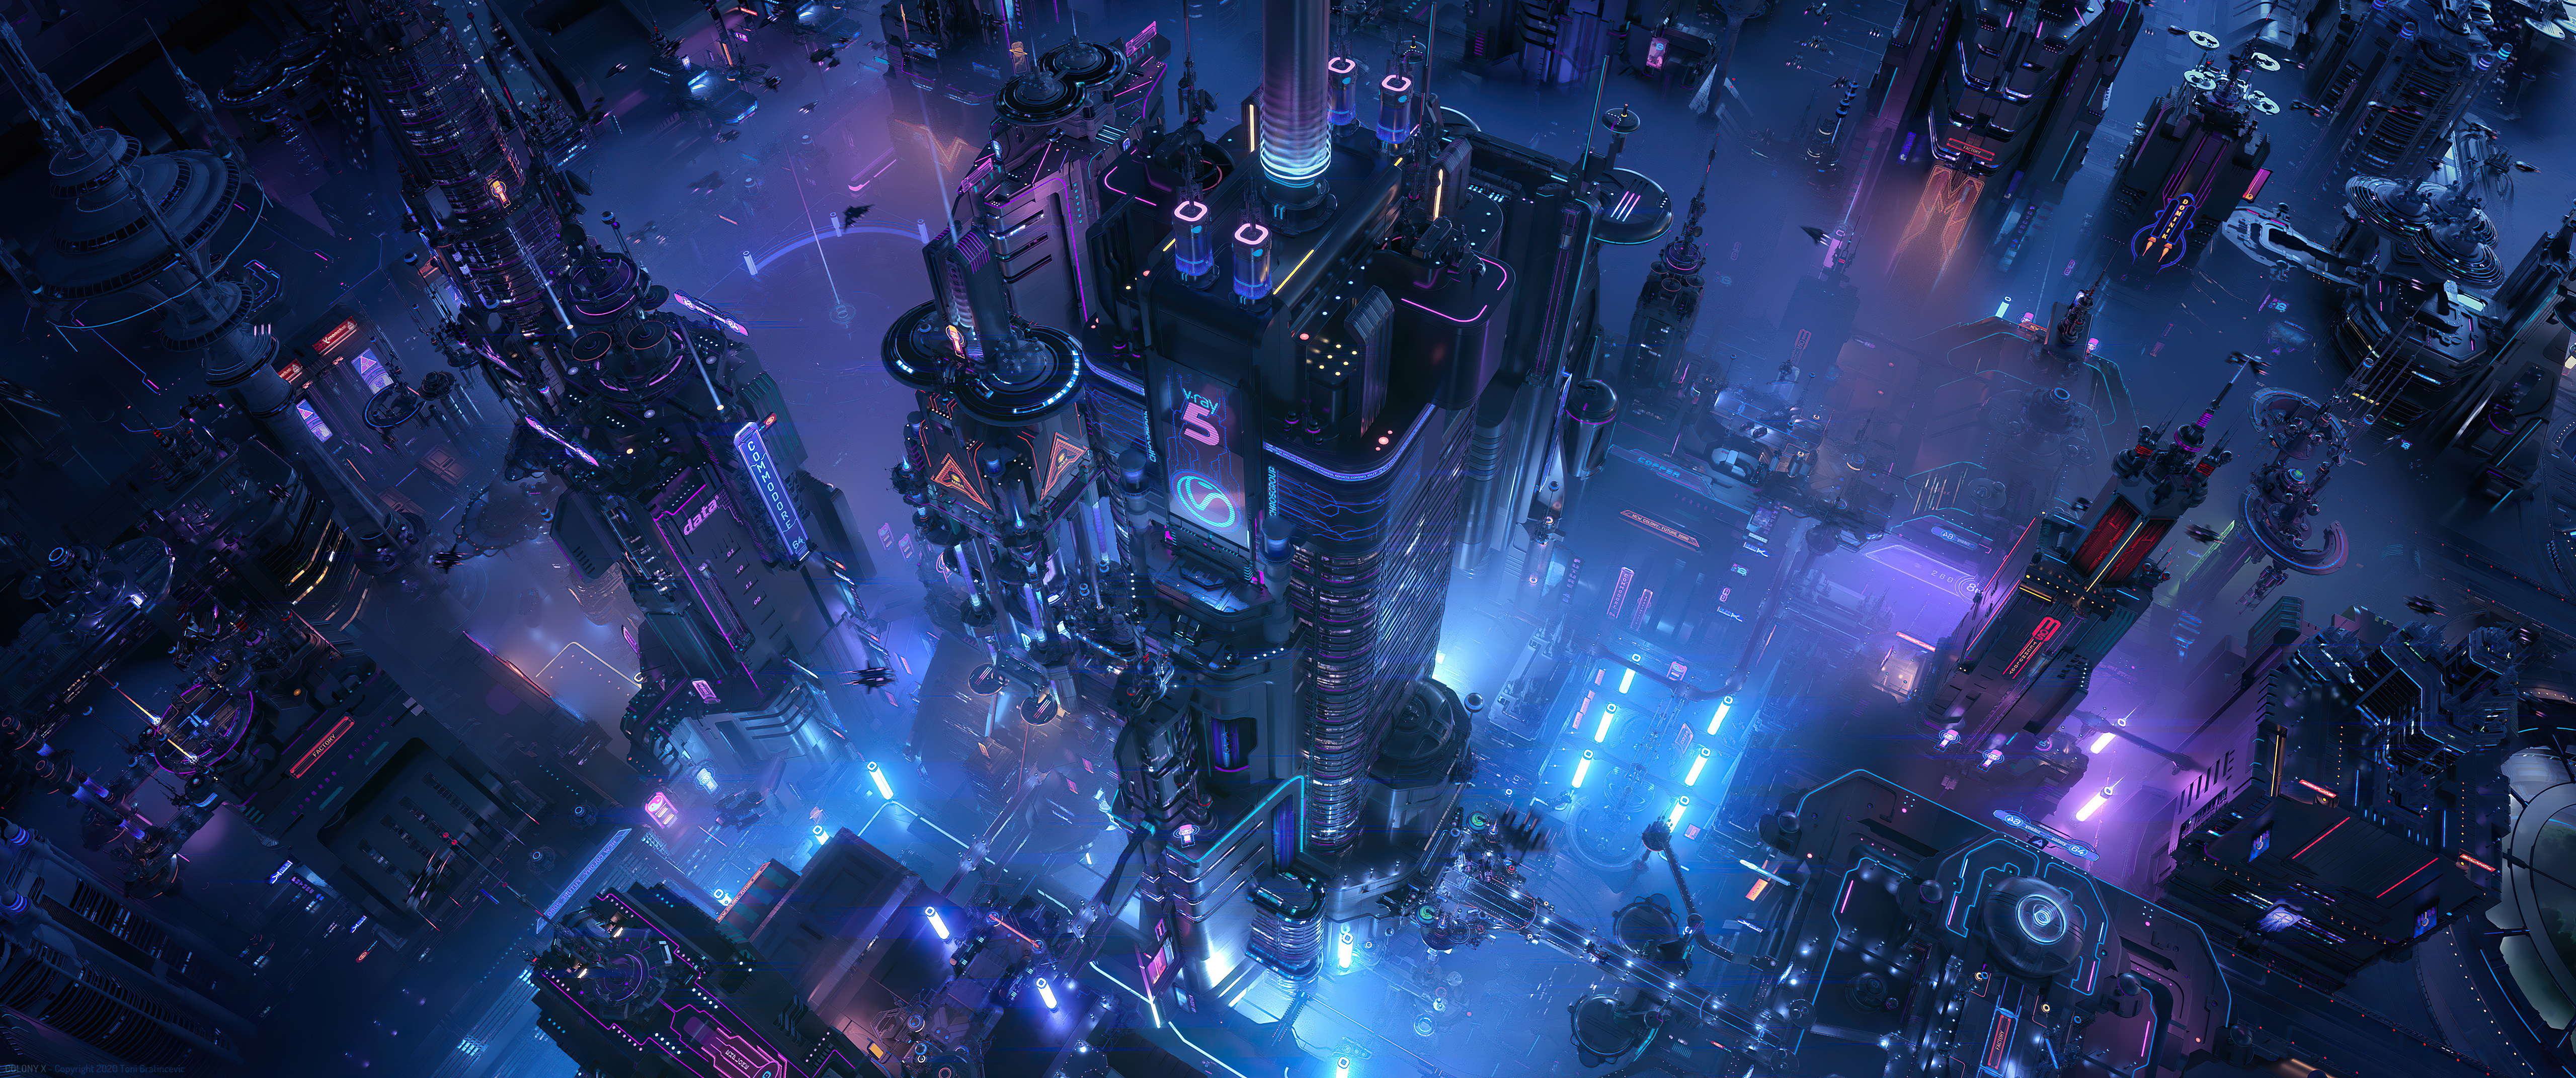 neon, cyberpunk, skyscraper, city, sci fi, building